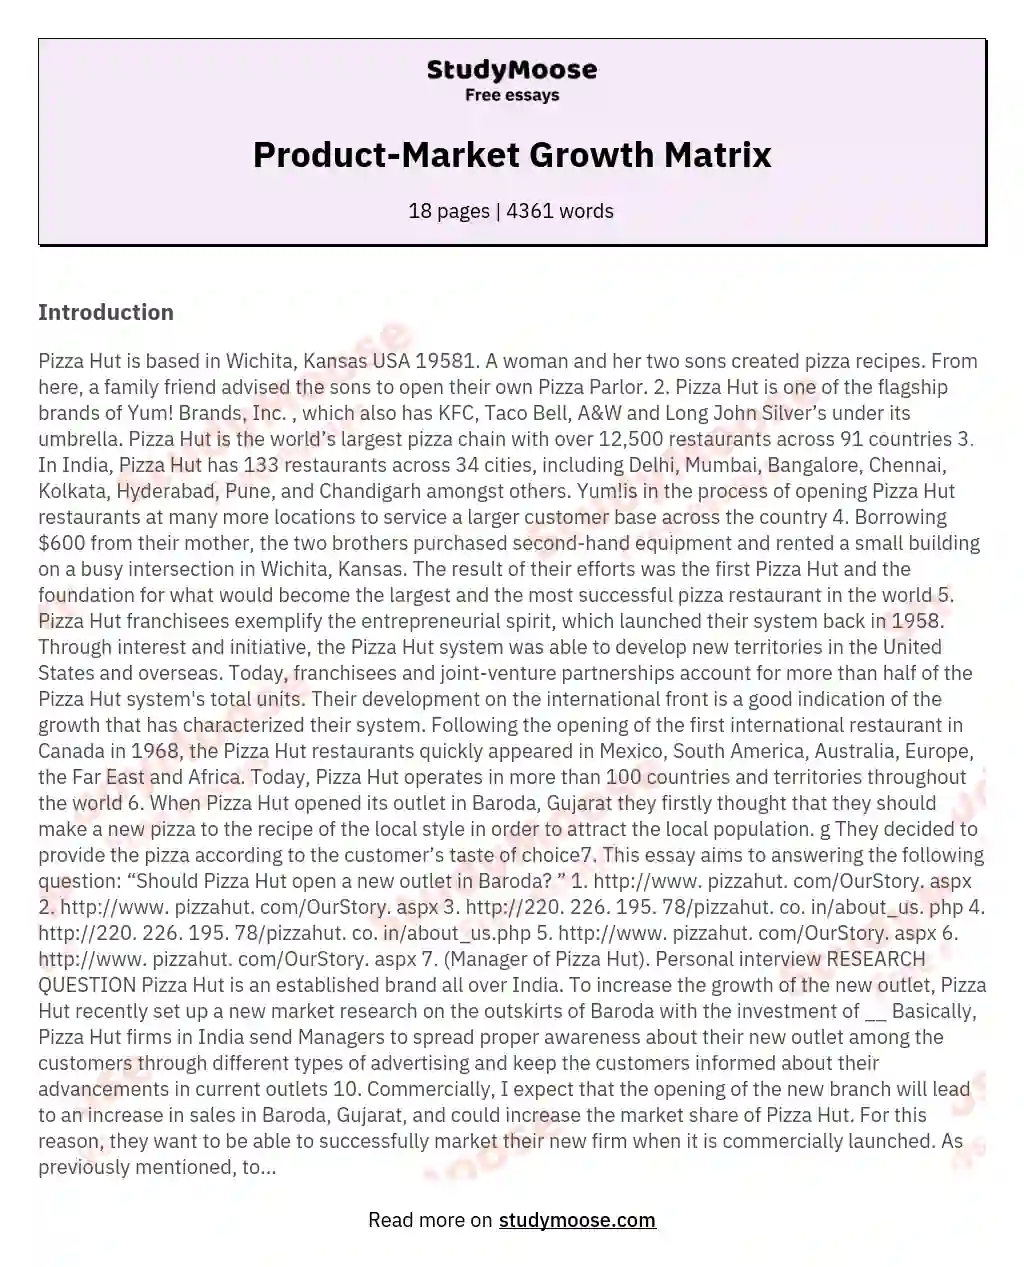 Product-Market Growth Matrix essay